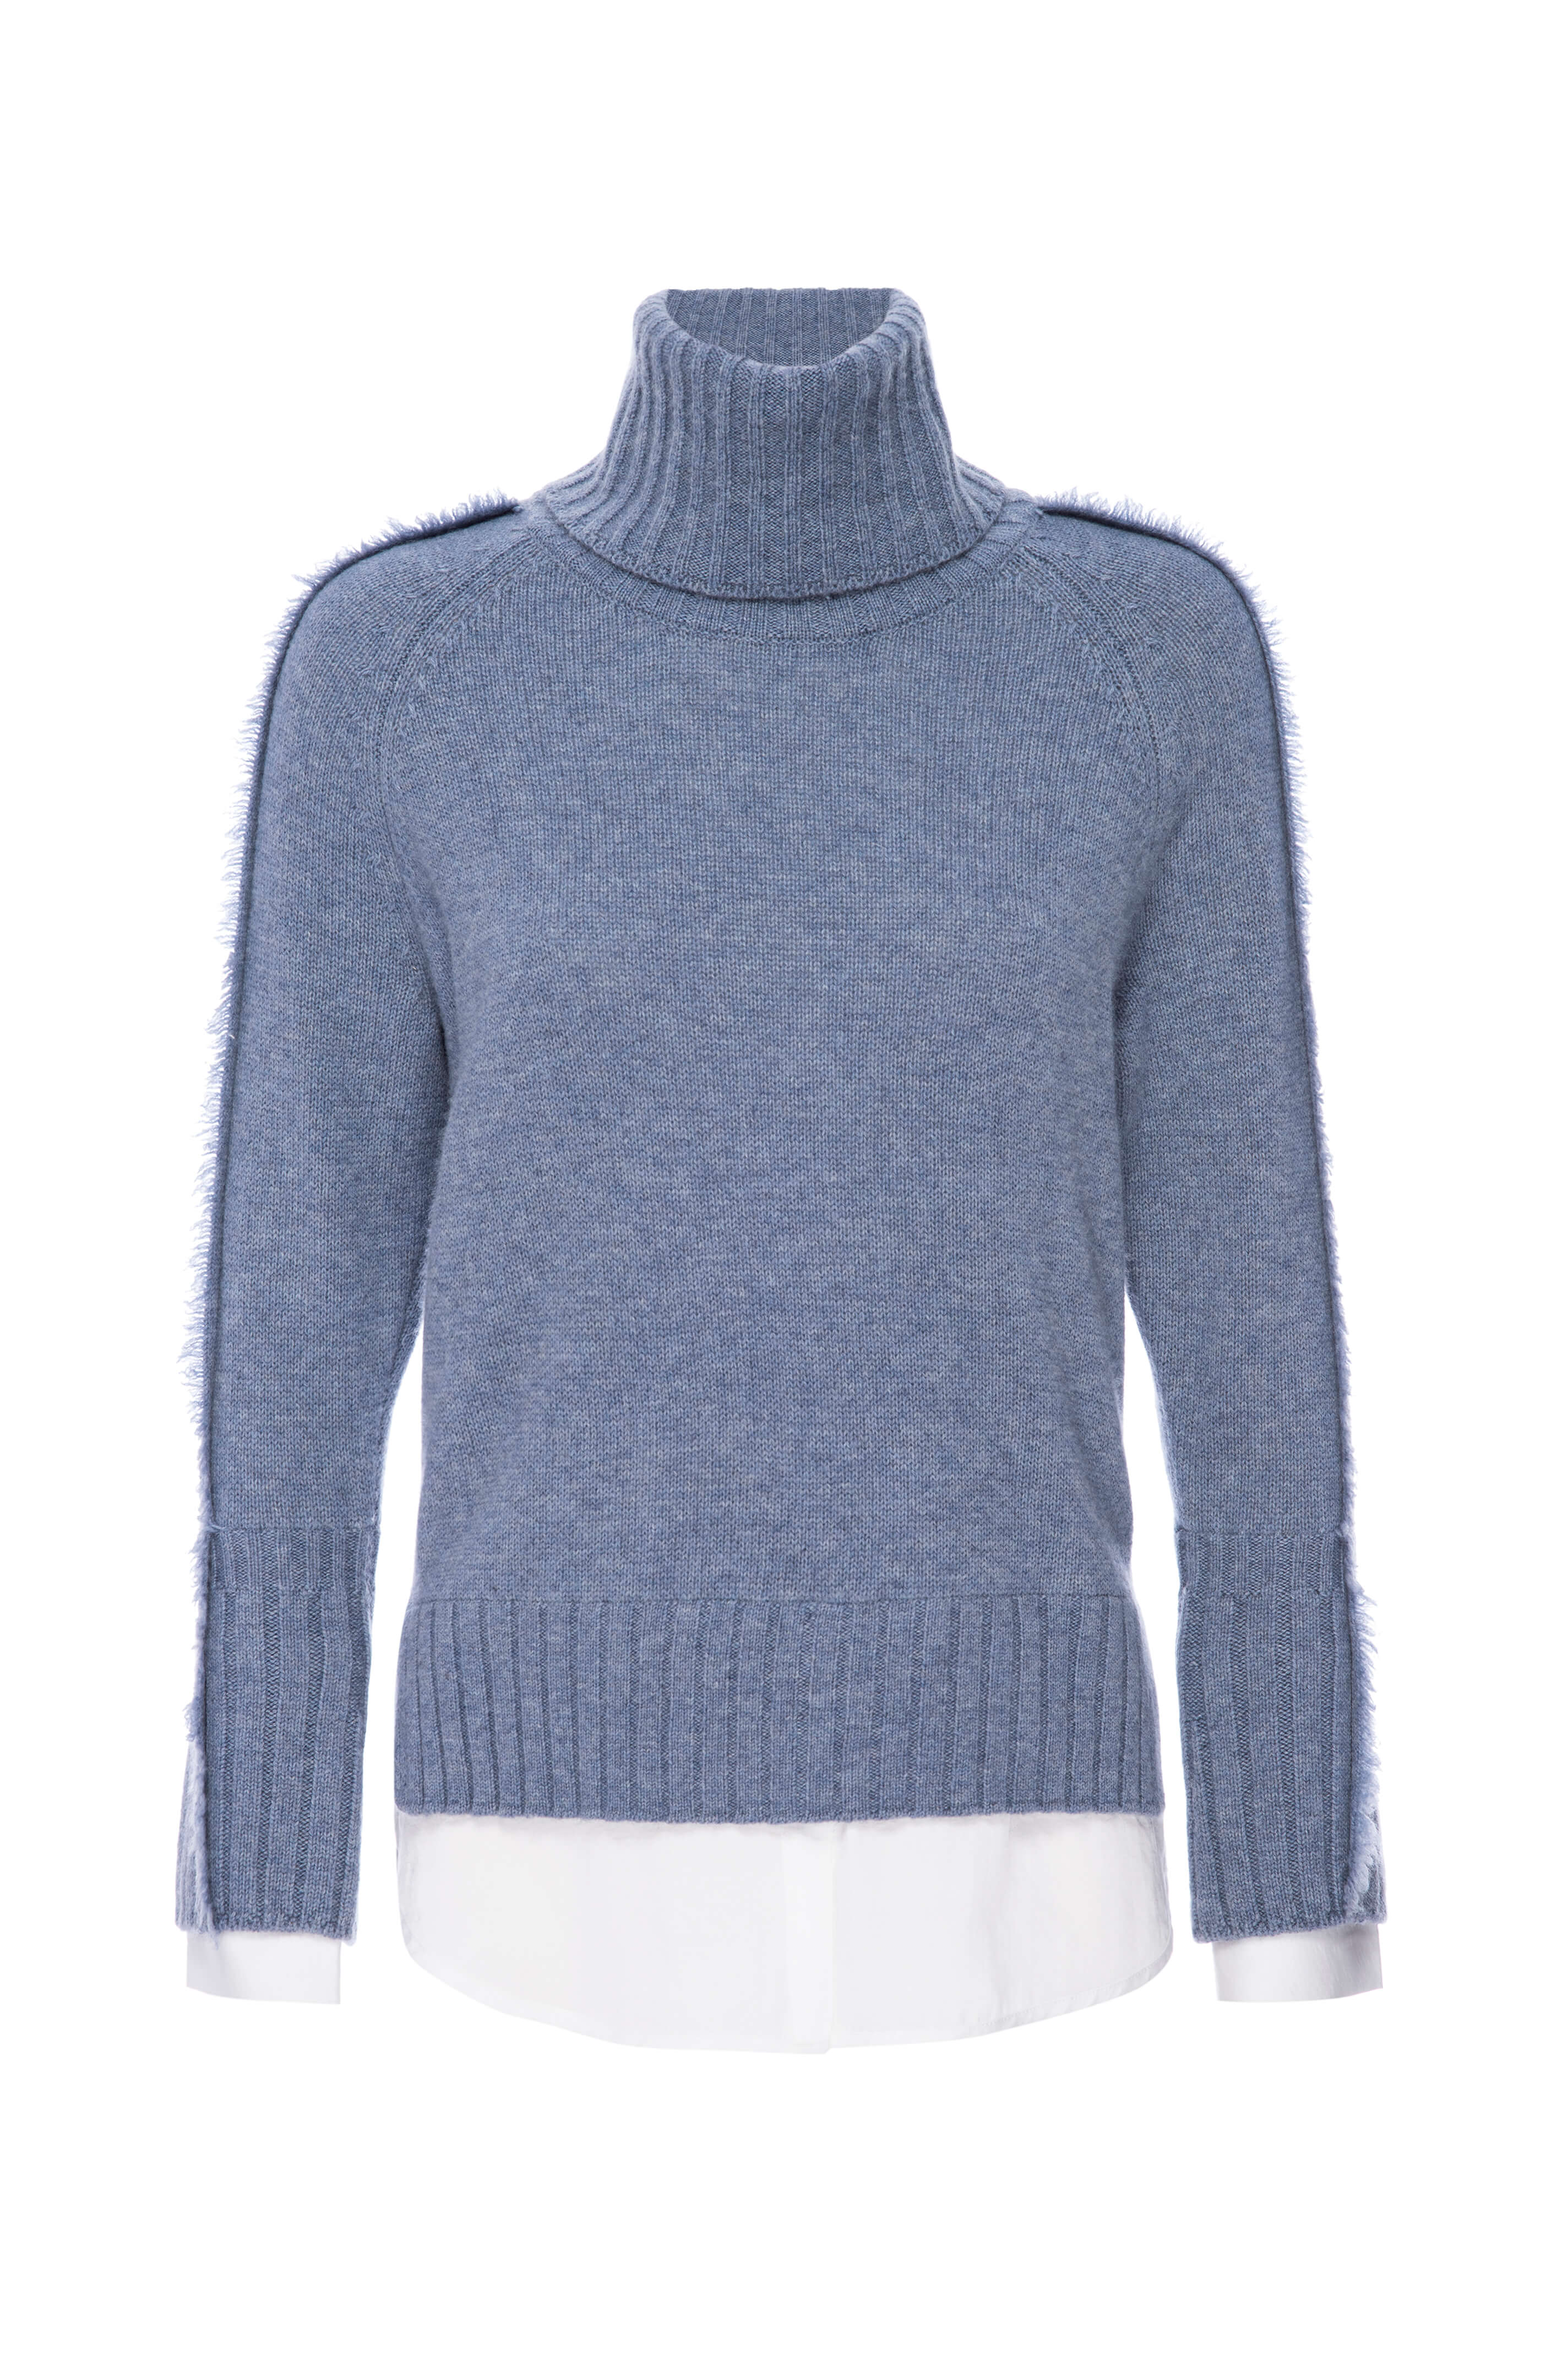 Jolie blue layered turtleneck sweater flat view